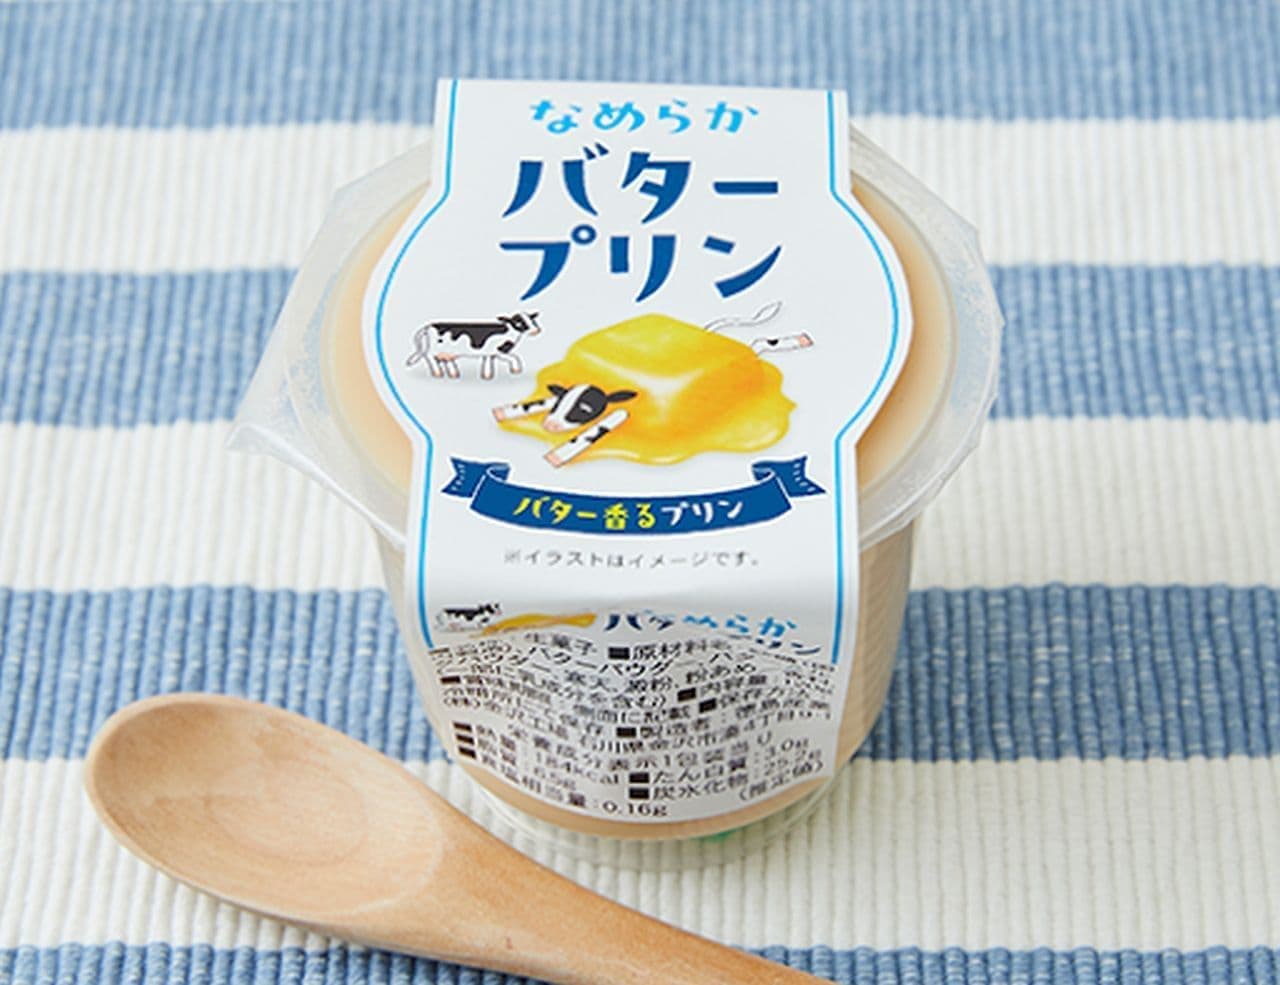 Tokushima Sangyo Smooth butter pudding